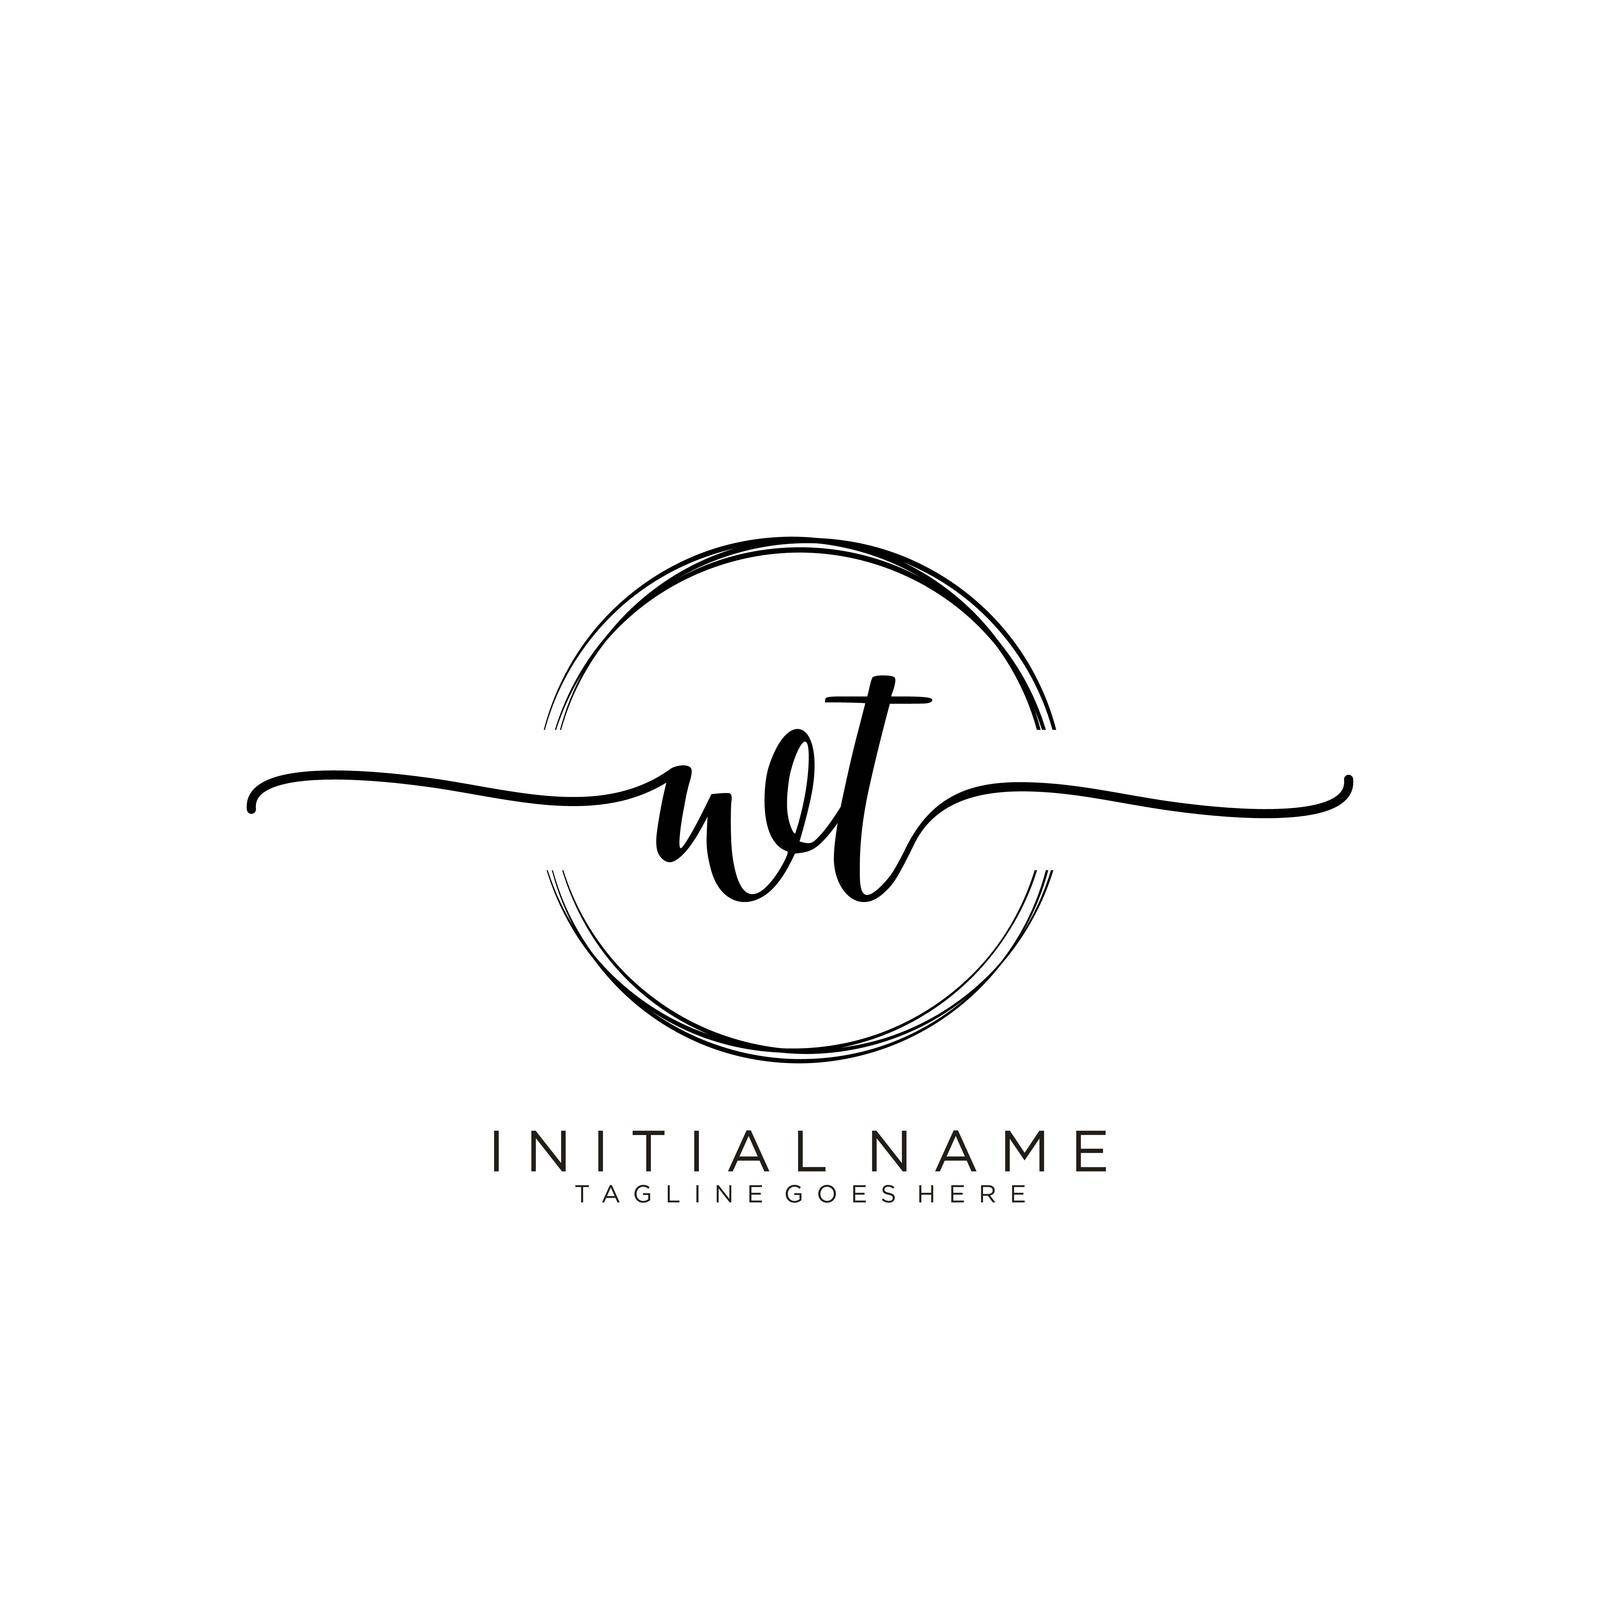 Initial handwriting logo design. Logo for fashion,photography, wedding, beauty, business company.